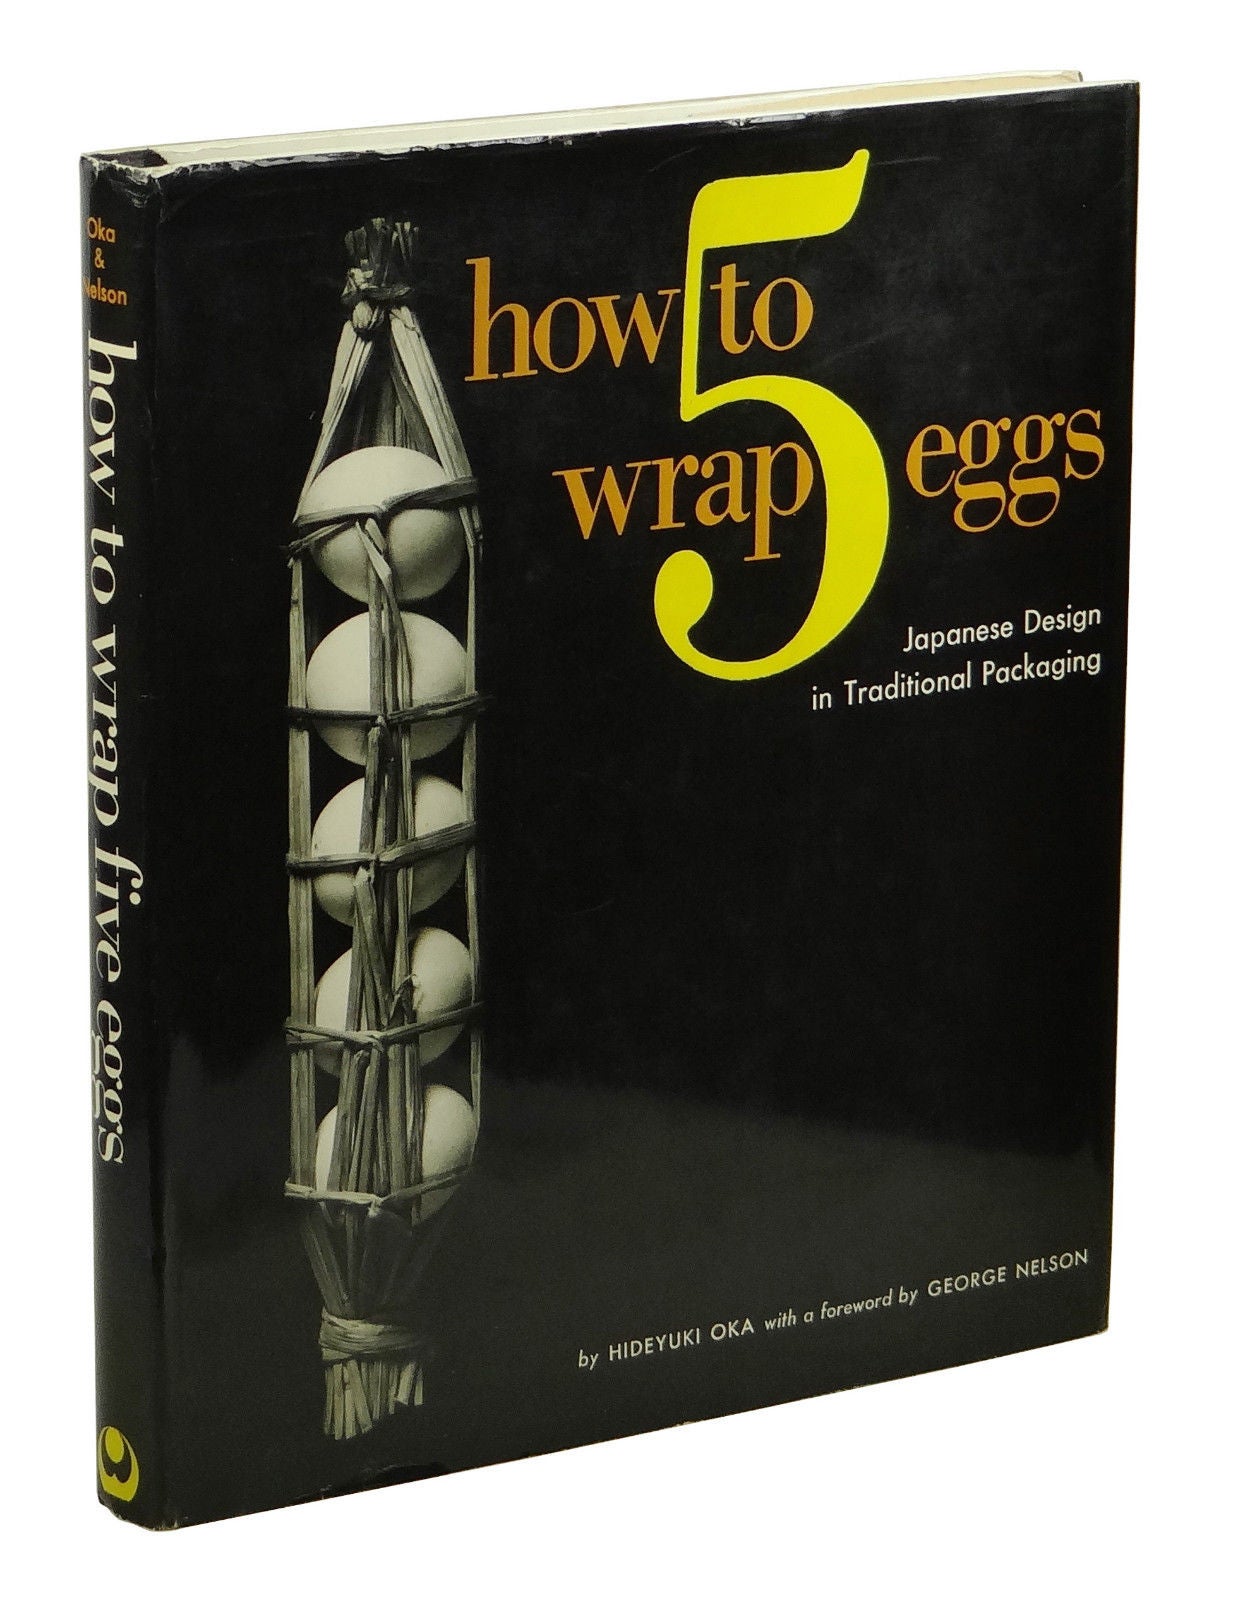 How to Wrap Five Eggs: Japanese Design in Traditional Packaging by Hideyuki  Oka, Hideyuki Sakai, Photographer on Burnside Rare Books